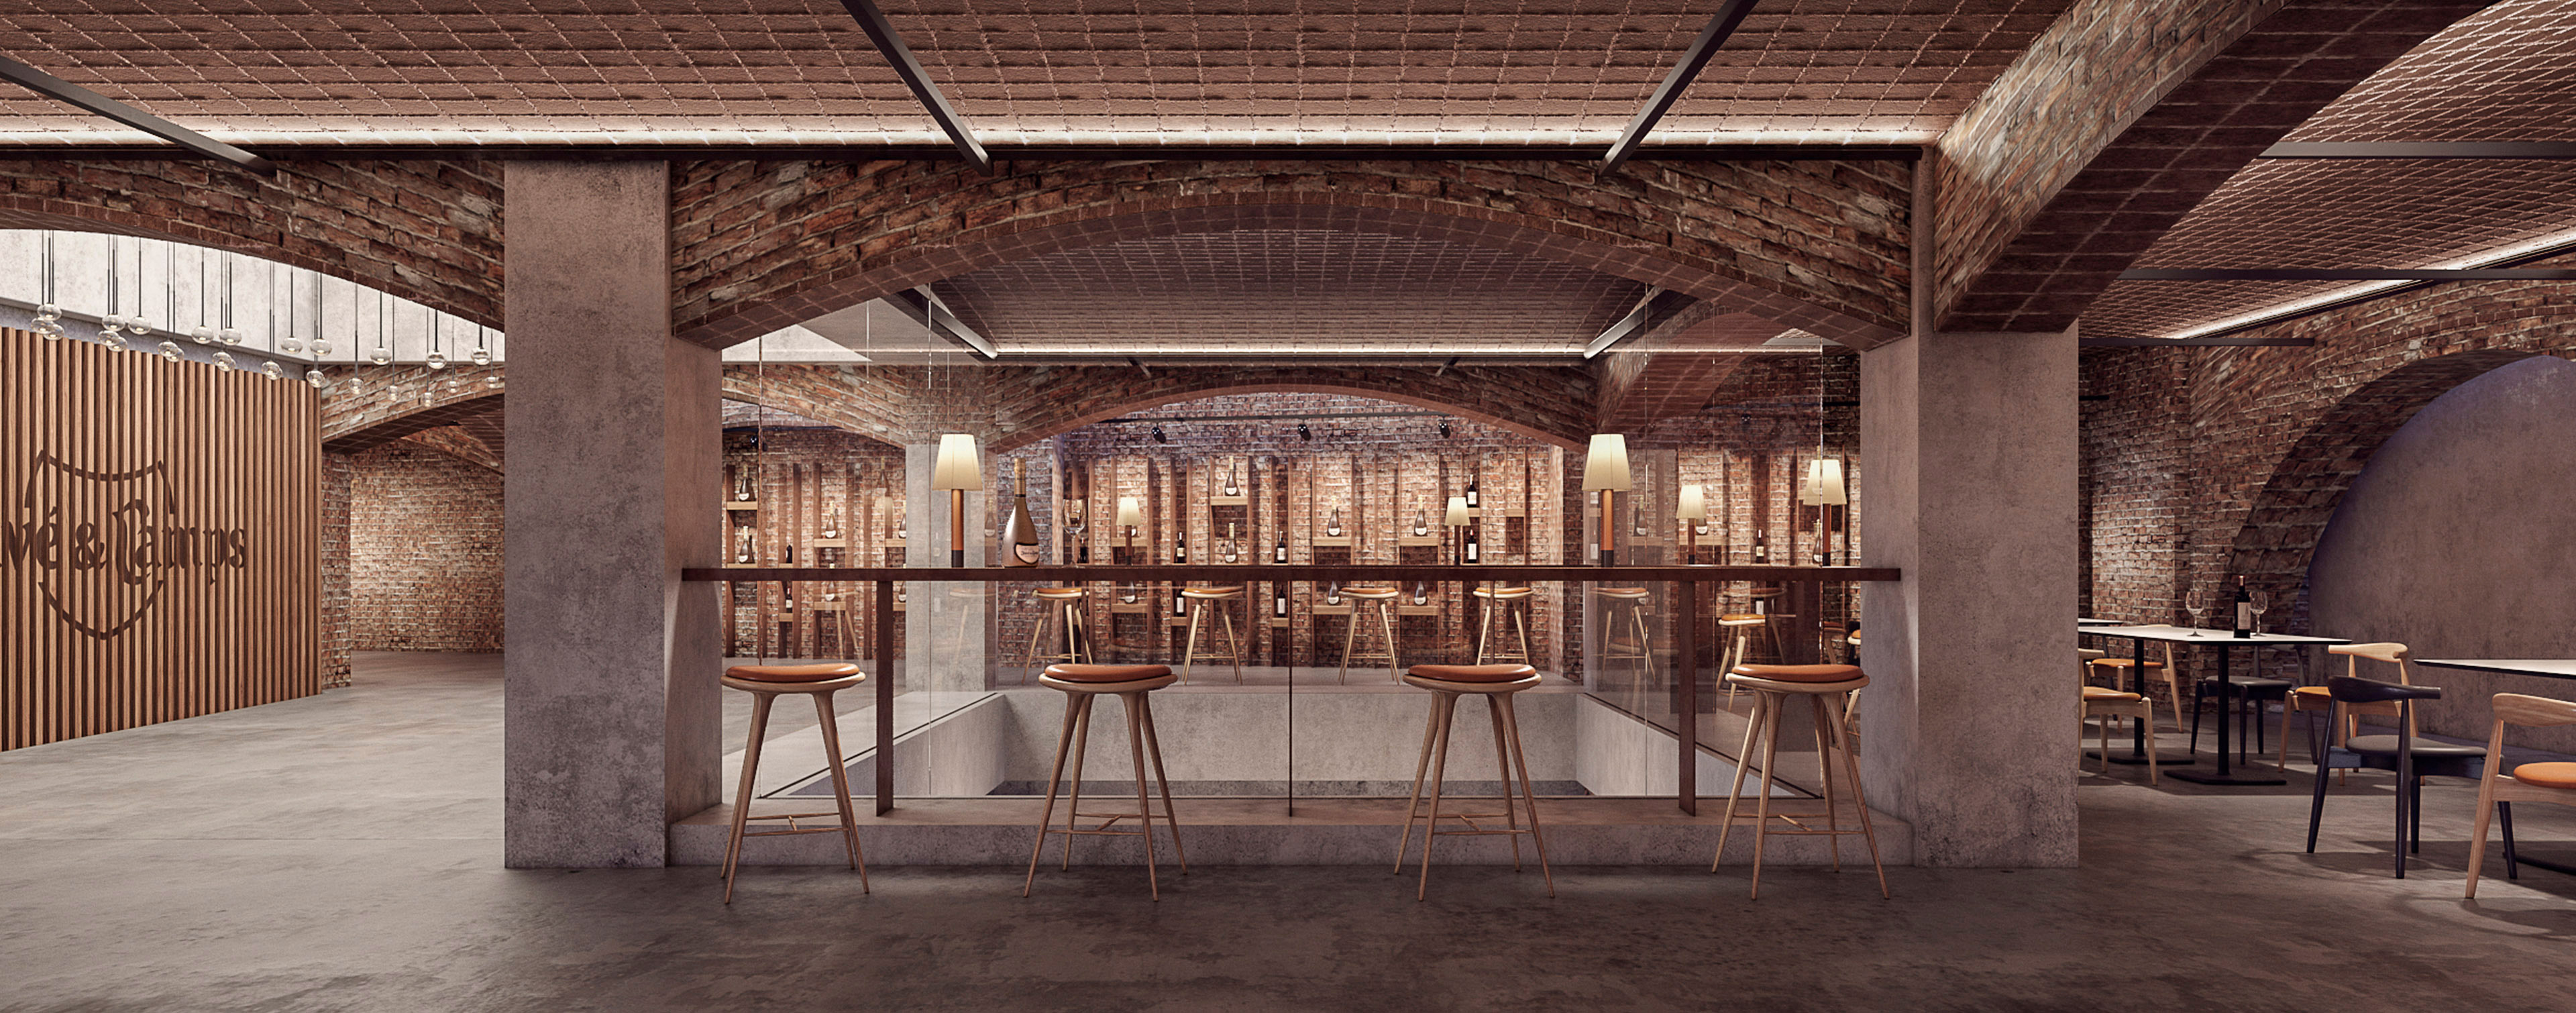 luv studio luxury architects santsadurni juve y camps winery IMG 02 - LUV Studio - Architecture & Design - Barcelona